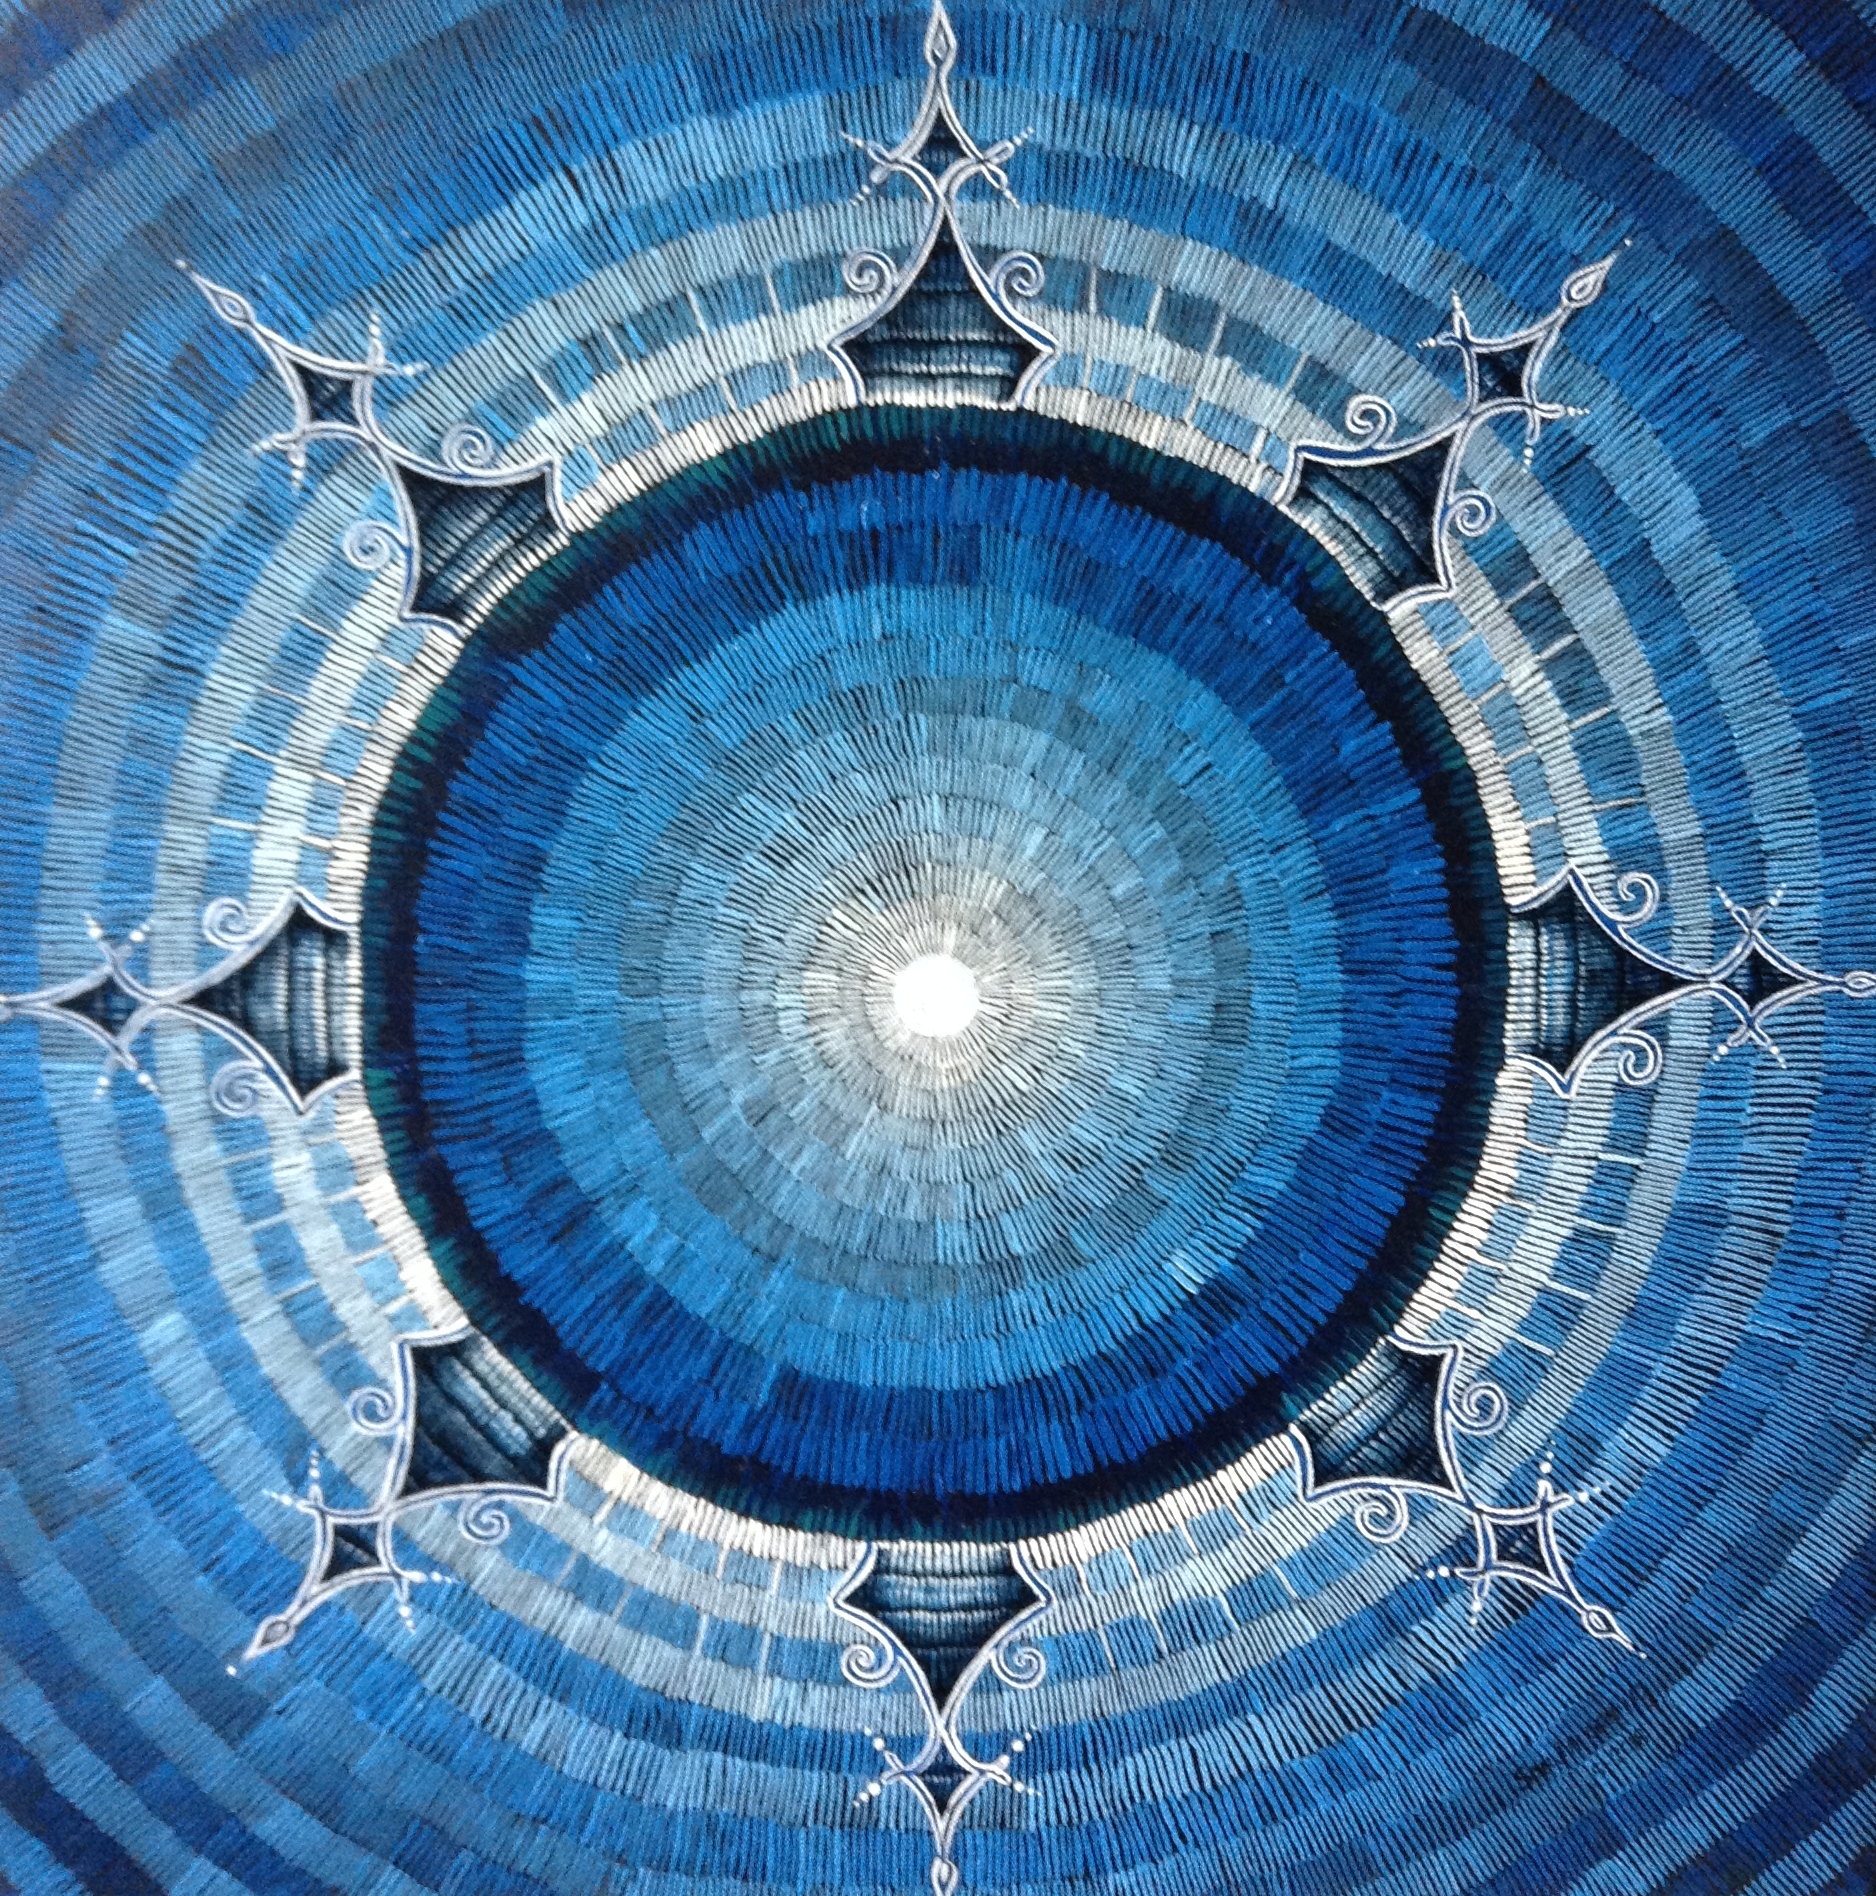 #461 - Chakra Mandala I (Fibrous Series) oil on canvas 20x20, 4/18 (4)